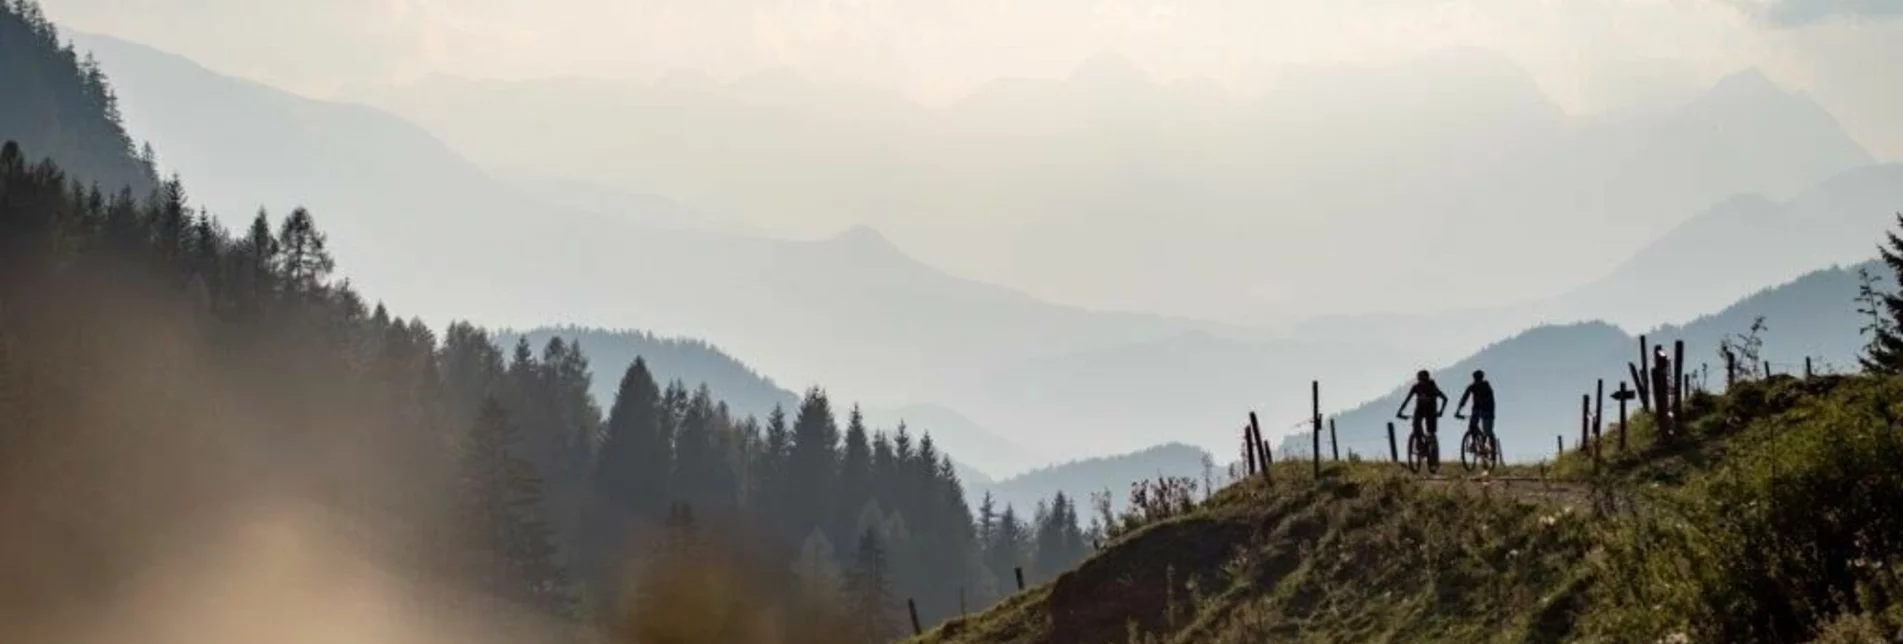 Mountain Biking Trans National Park Stage 02 Over alpine pastures into Styria - Touren-Impression #1 | © TV Gesäuse